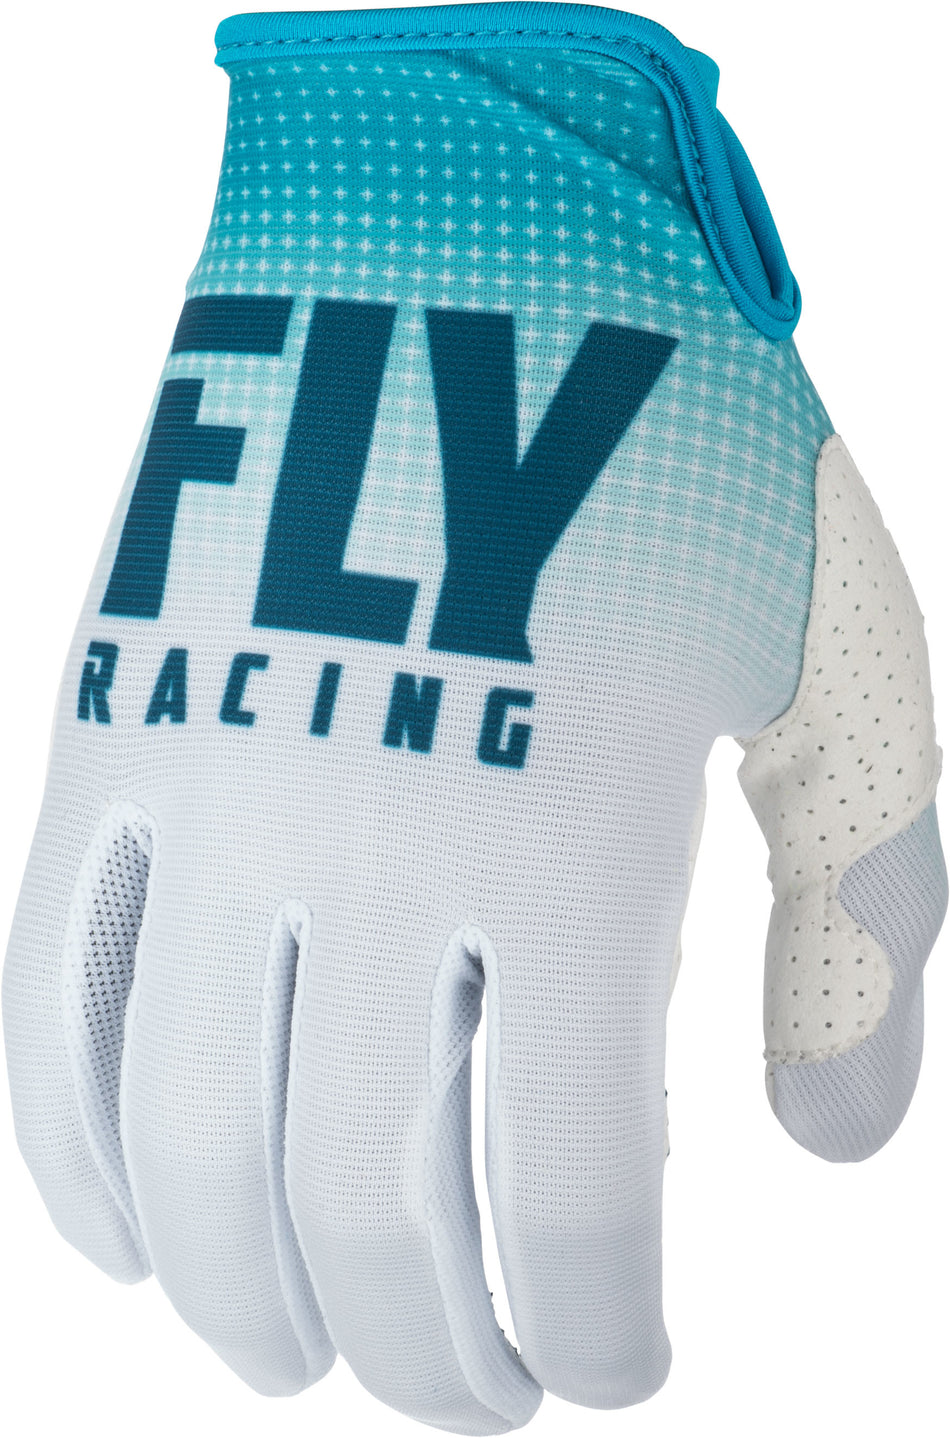 FLY RACING Lite Gloves Blue/White Sz 13 372-01113